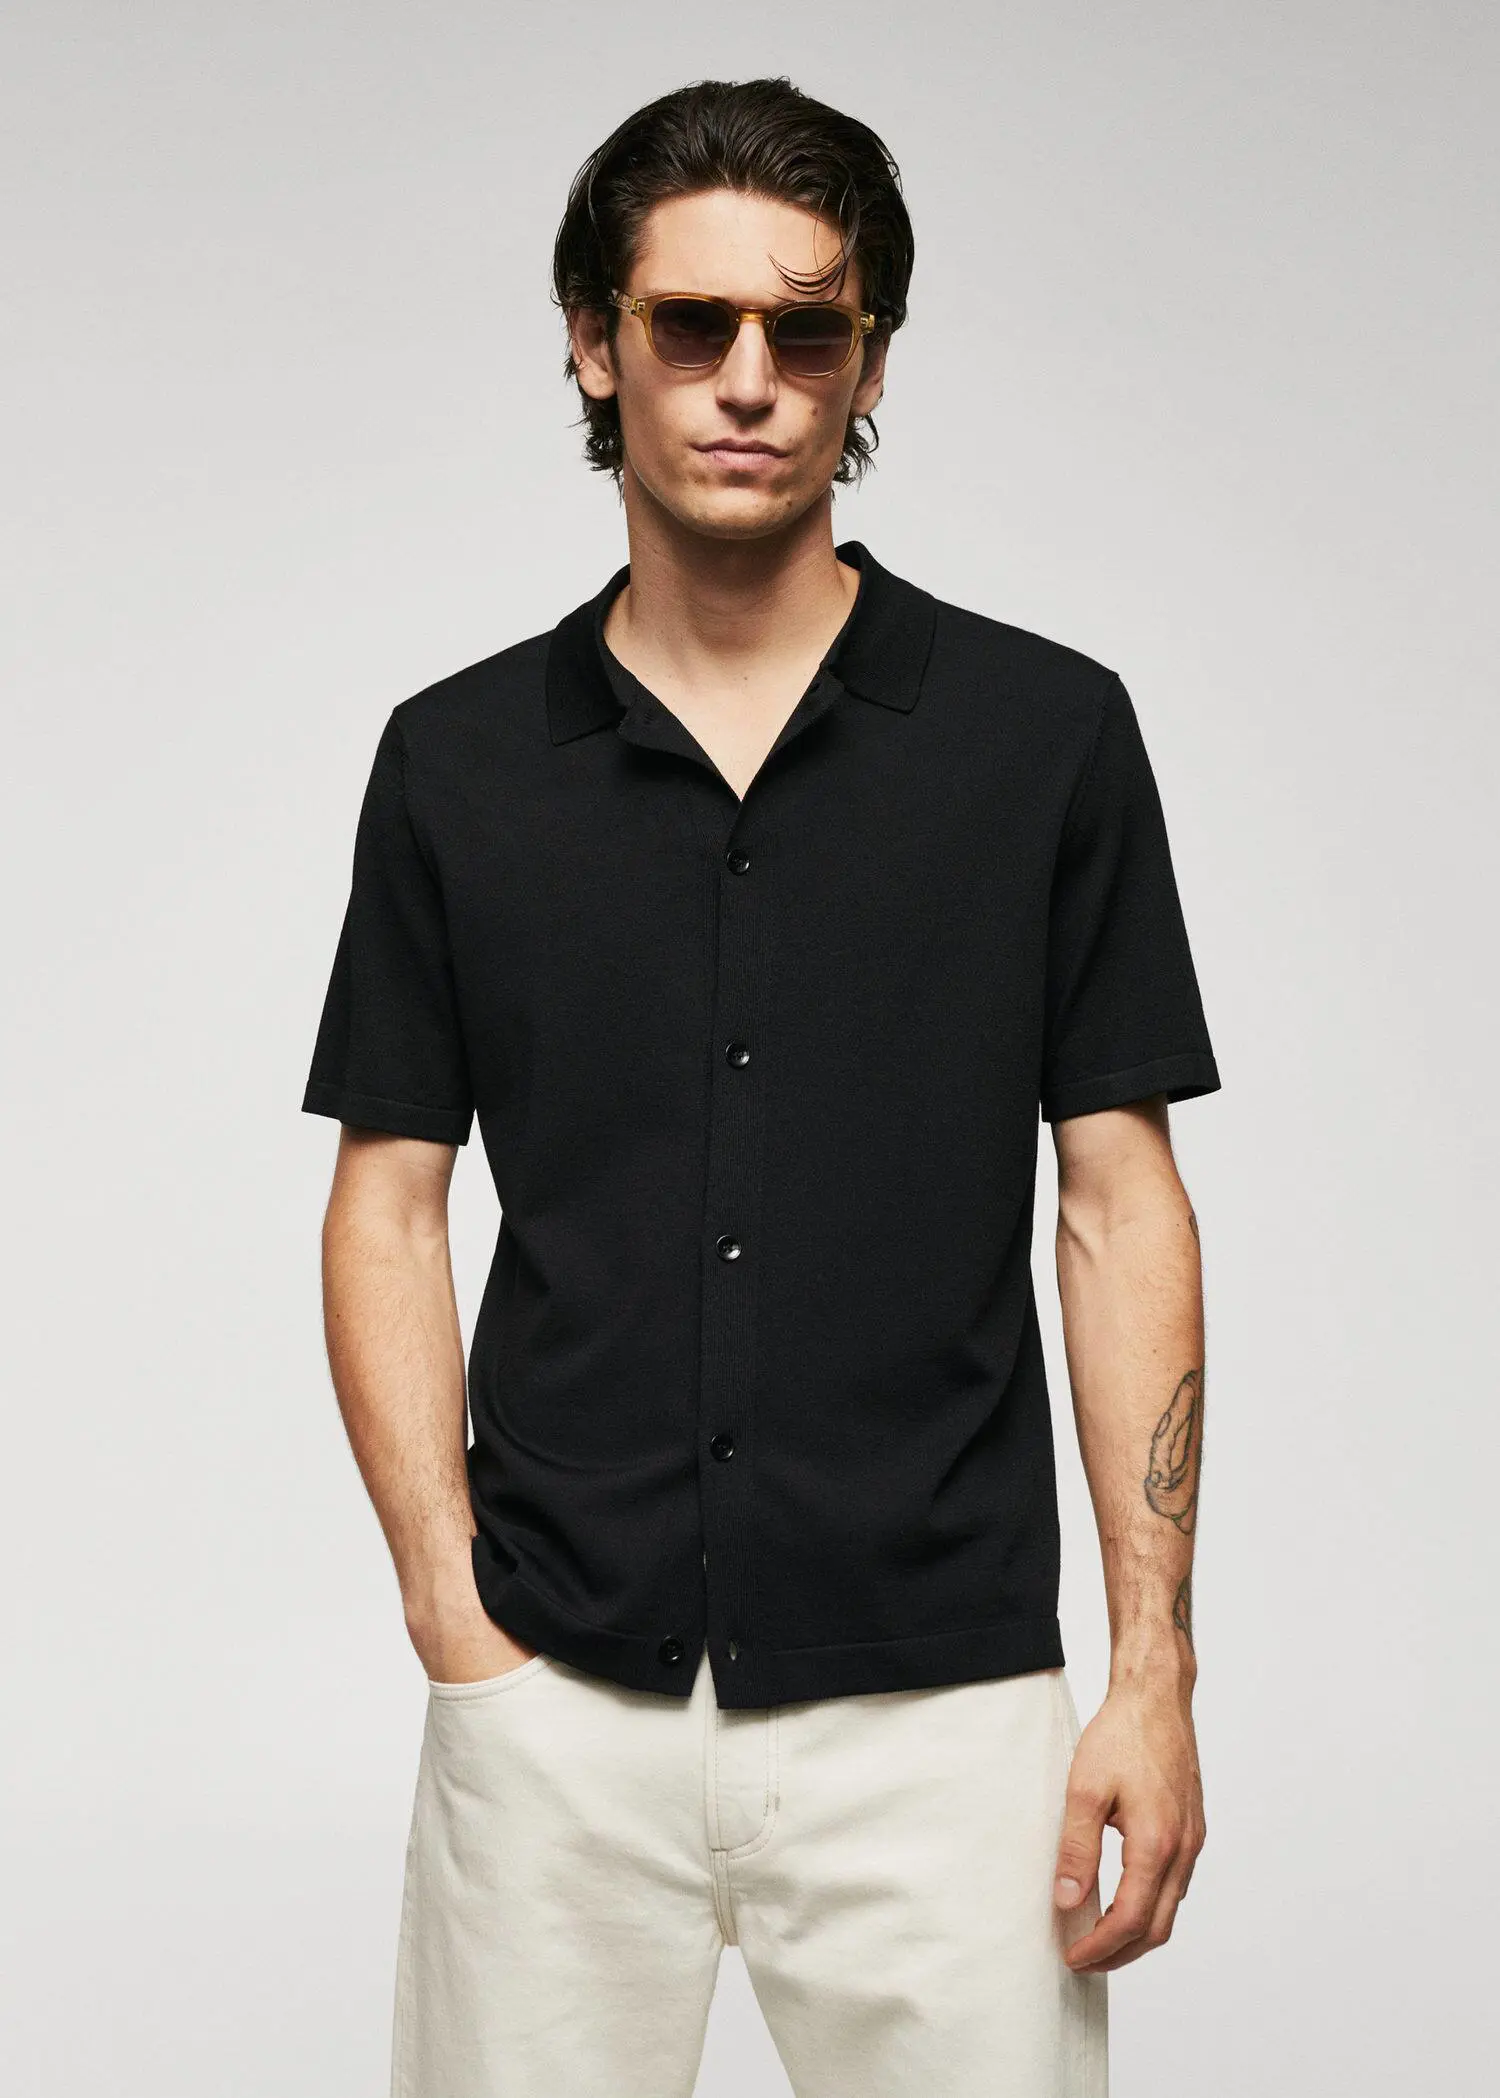 Mango Fine-knit buttoned polo shirt. a man wearing a black shirt and sunglasses. 